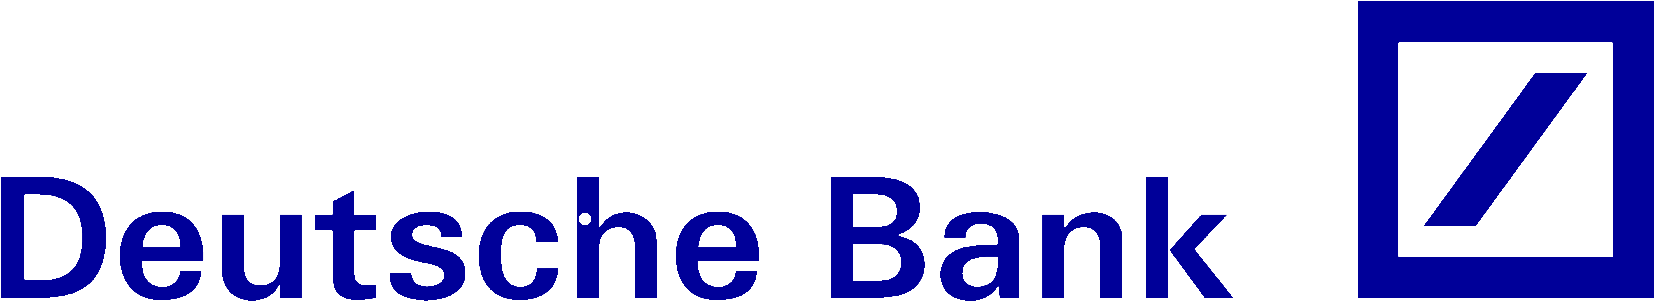 Db Logo Transparency - Deutsche Bank Logo Png Clipart - Large Size Png ...